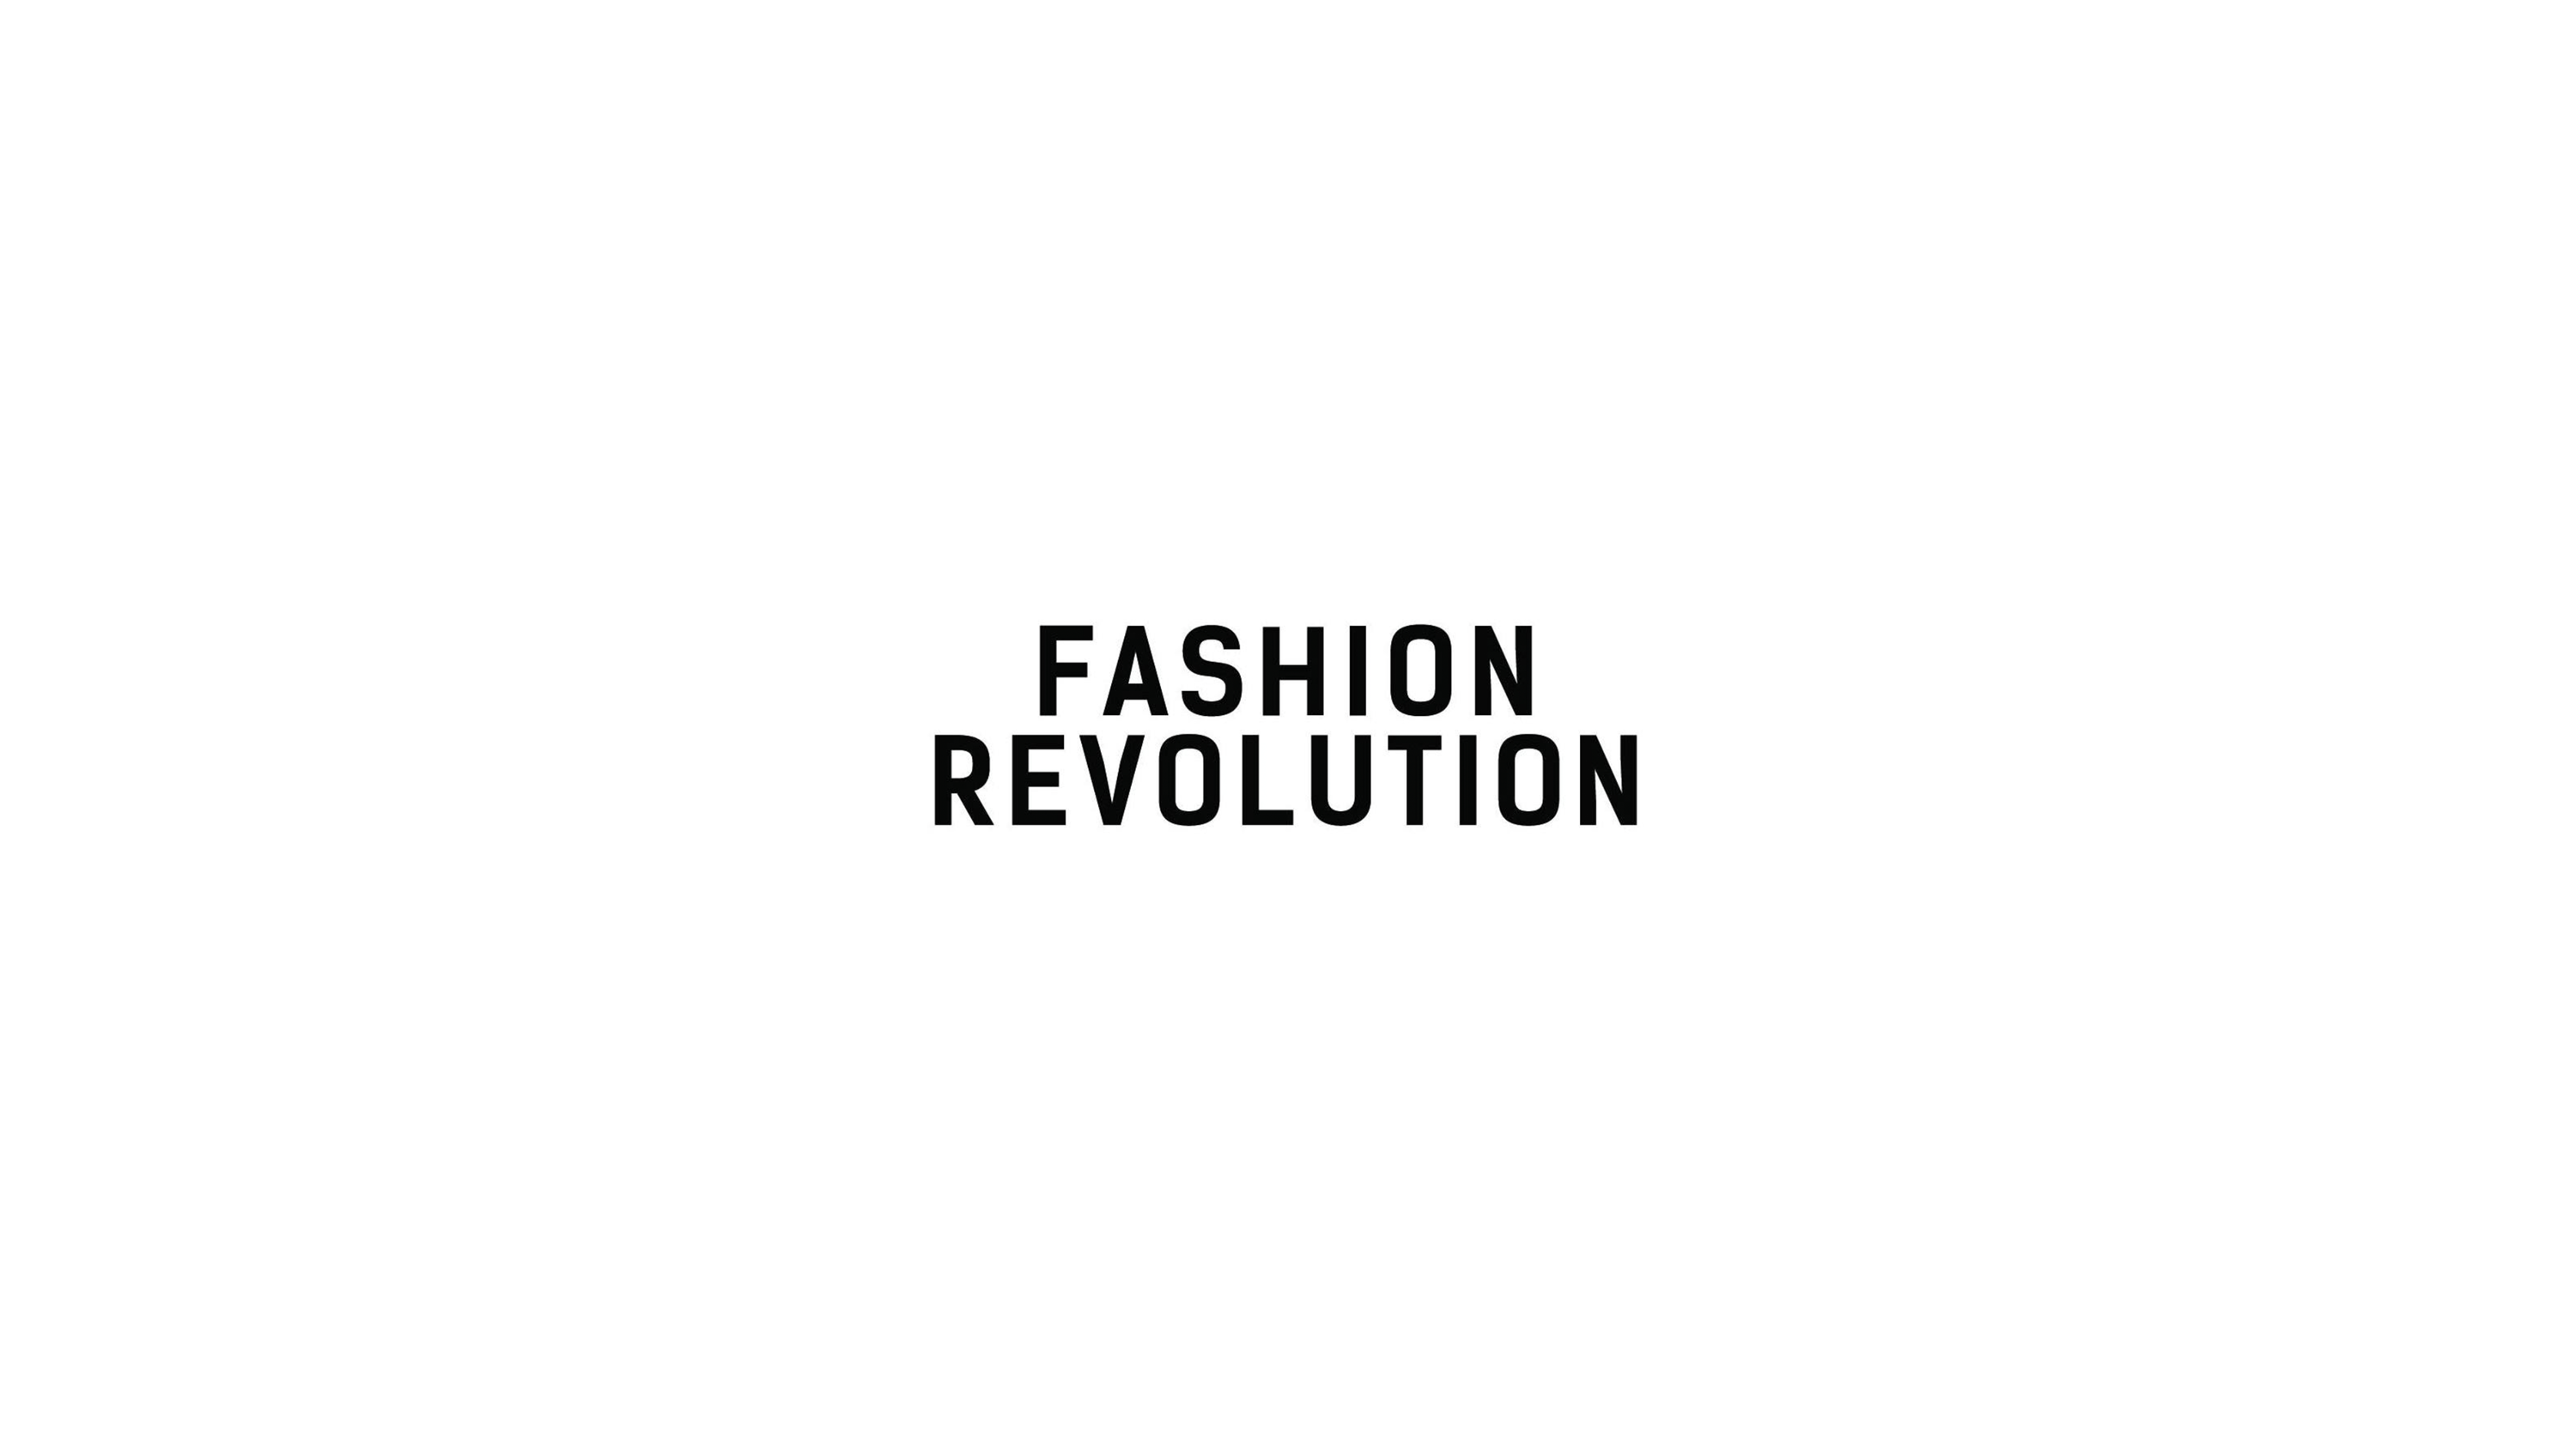 https://www.fashion-district.co.uk/wp-content/uploads/2021/07/Fashion-Revolution-1.png